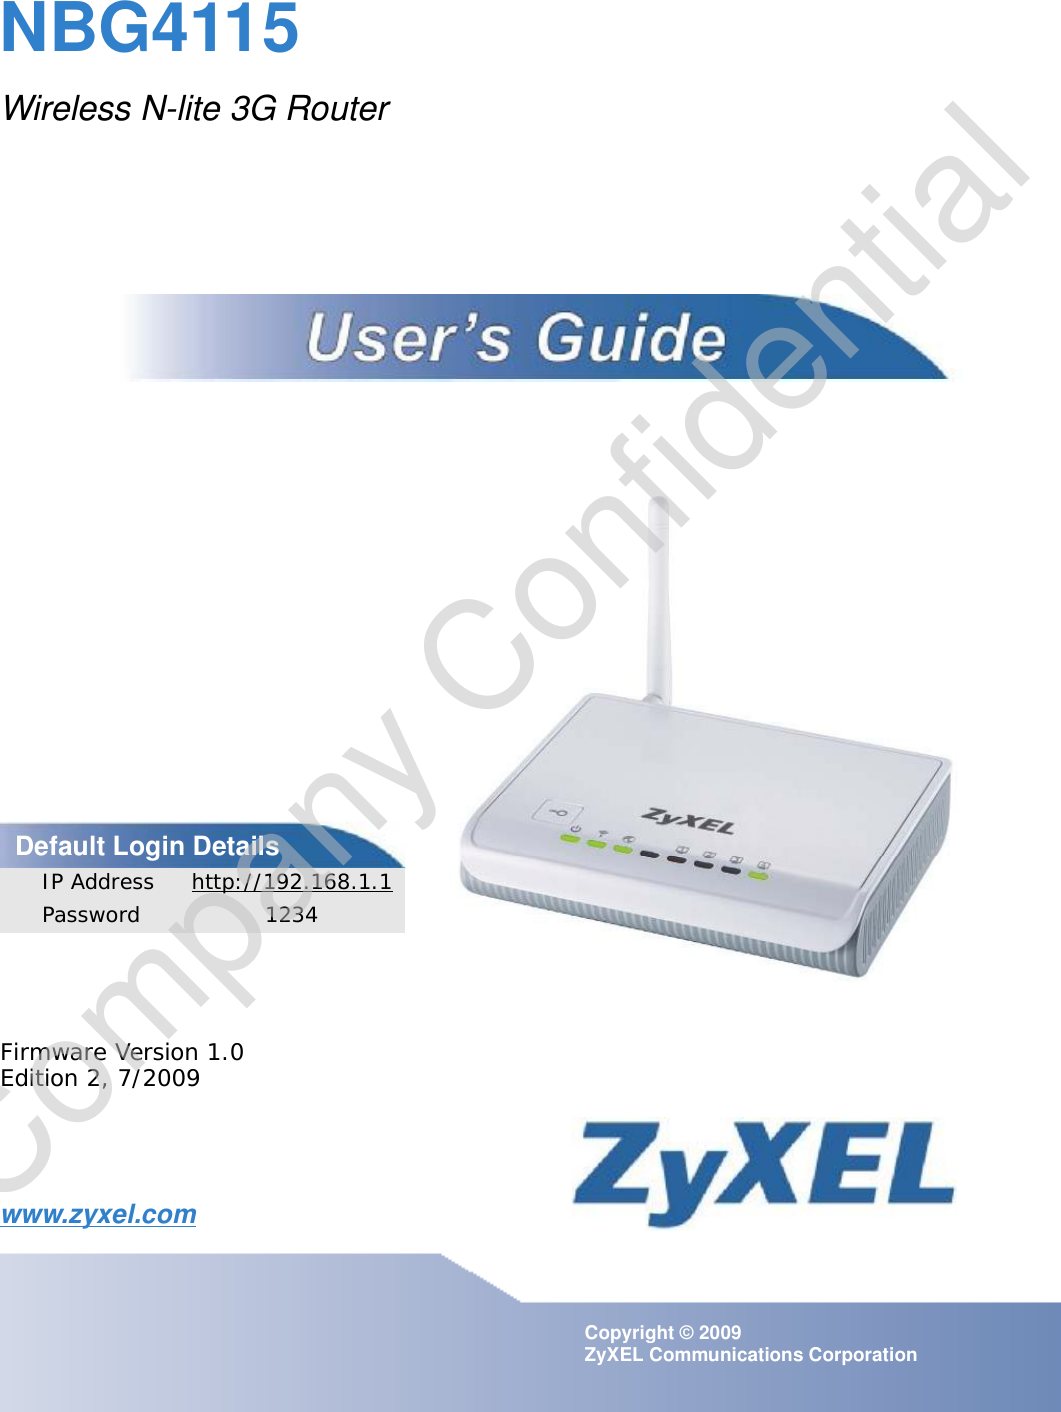 www.zyxel.comwww.zyxel.comNBG4115Wireless N-lite 3G RouterCopyright © 2009ZyXEL Communications CorporationFirmware Version 1.0Edition 2, 7/2009Default Login DetailsIP Address http://192.168.1.1Password 1234Company Confidential